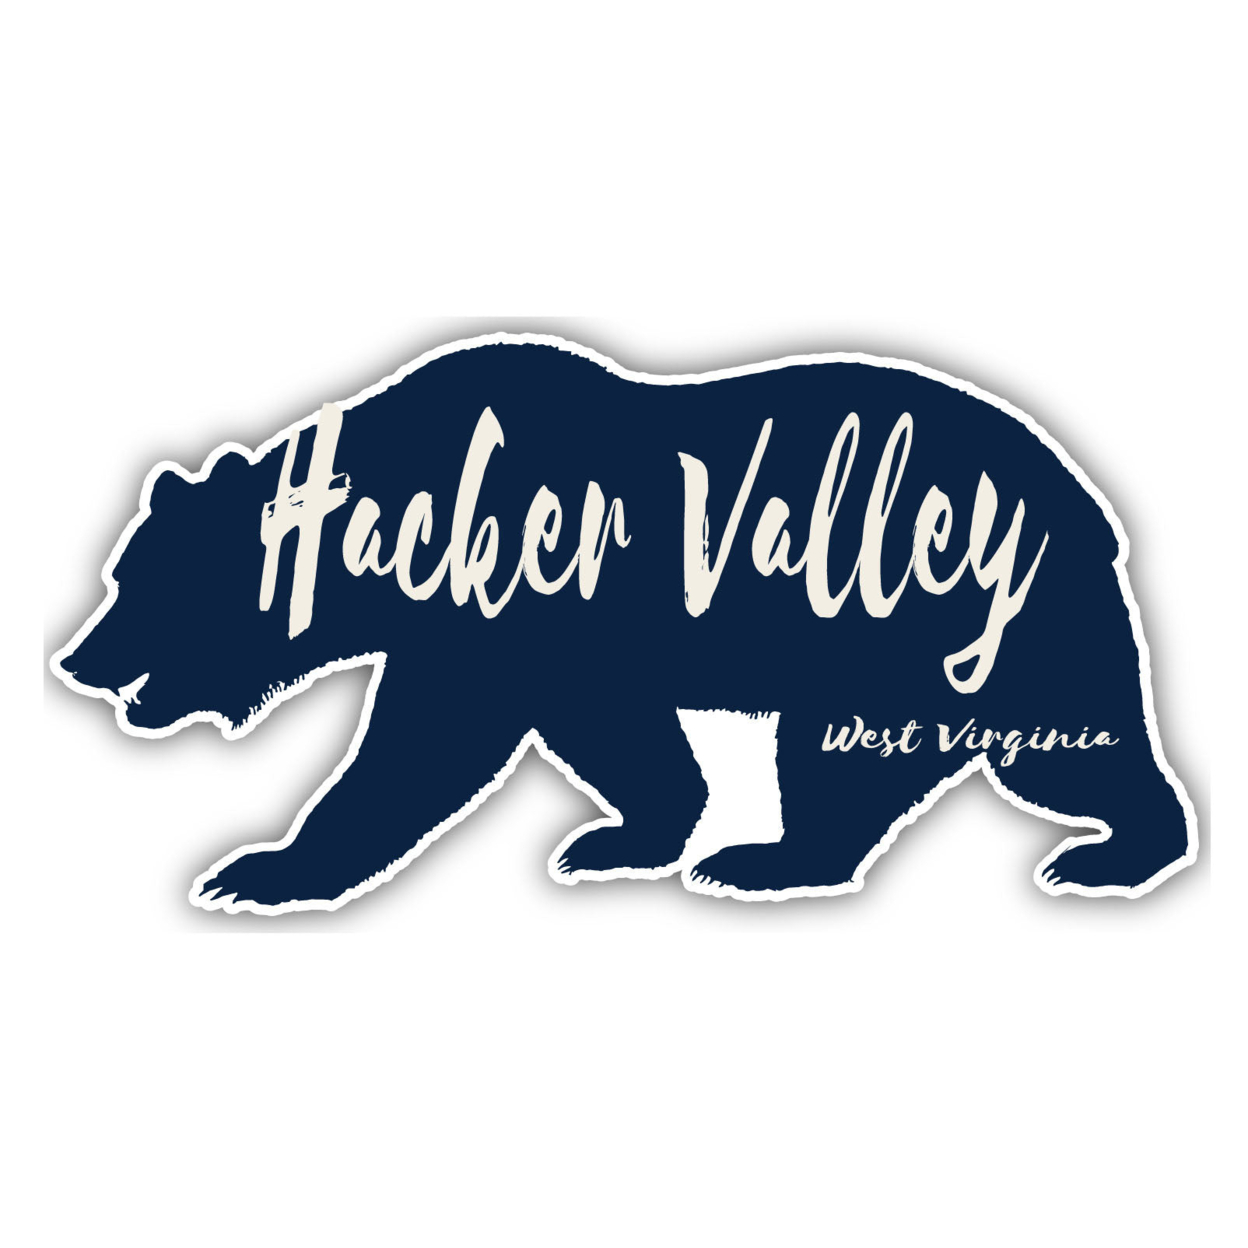 Hacker Valley West Virginia Souvenir Decorative Stickers (Choose Theme And Size) - Single Unit, 4-Inch, Bear